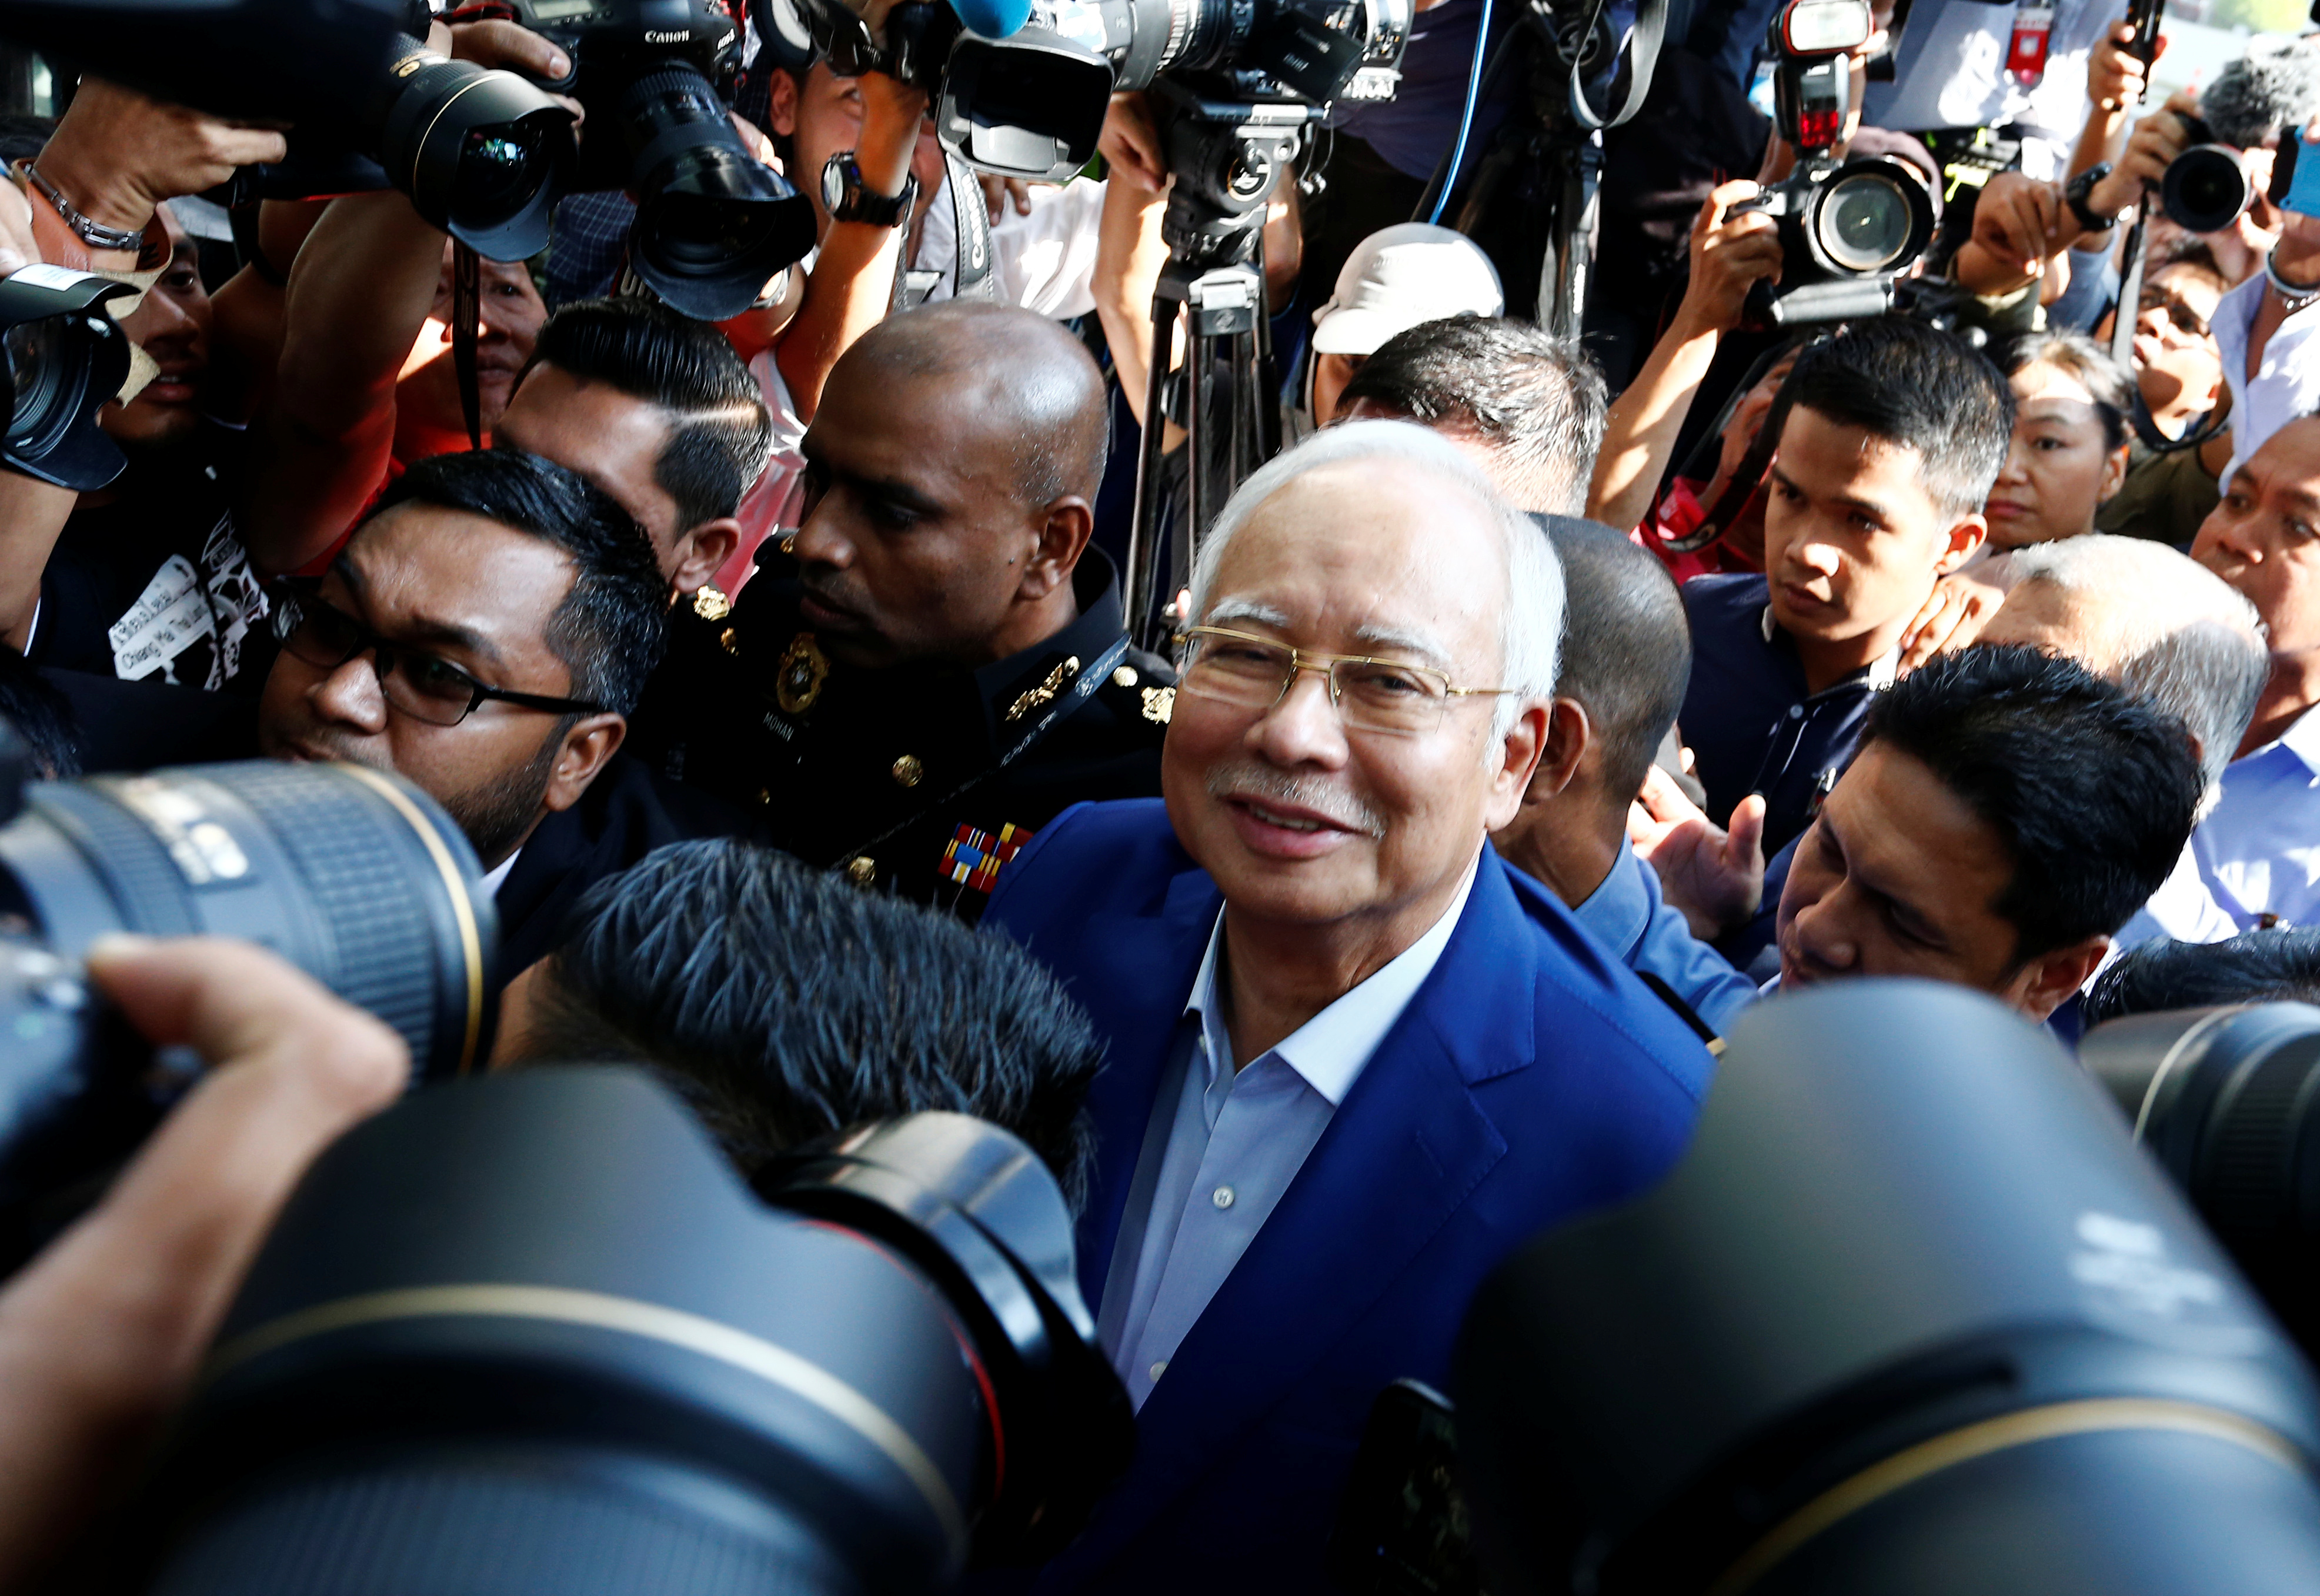 Malaysia's former prime minister Najib Razak arrives to give a statement to the Malaysian Anti-Corruption Commission (MACC) in Putrajaya